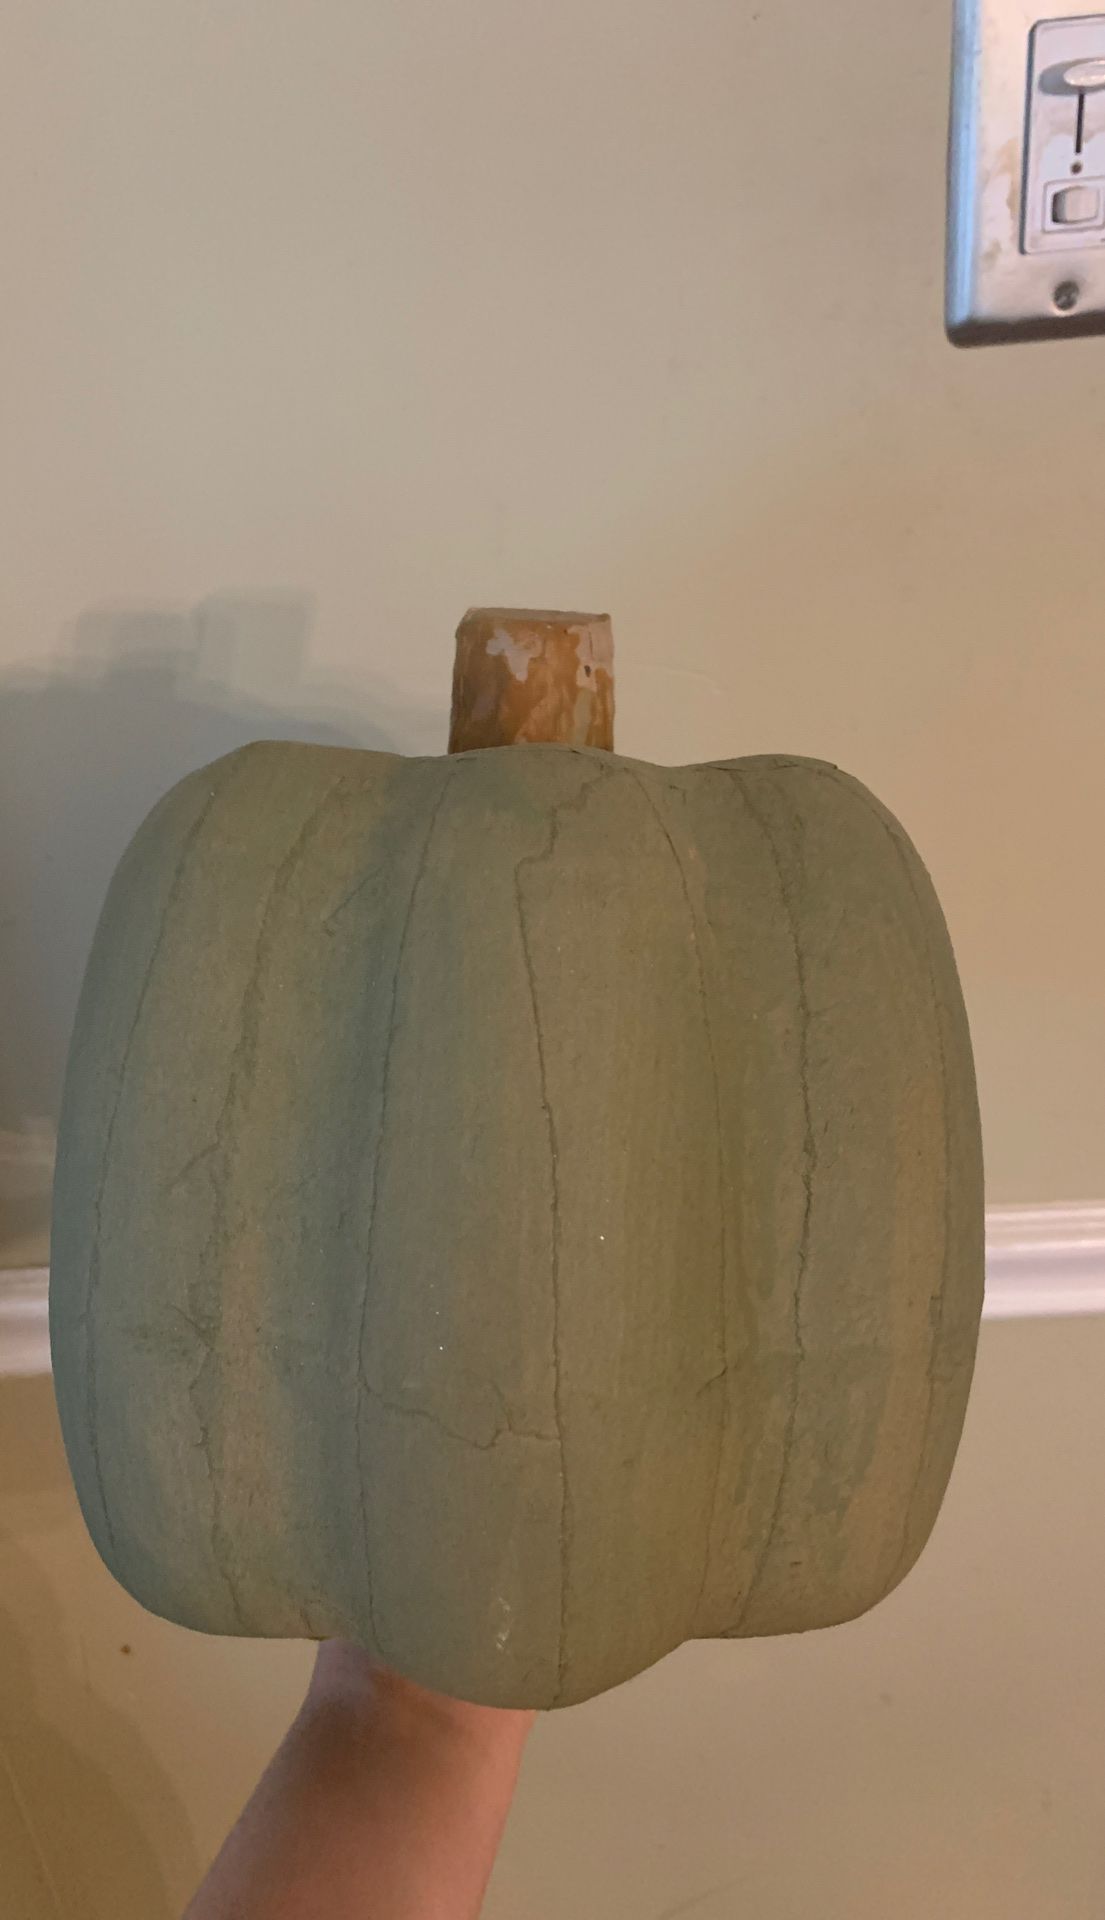 Cardboard pumpkin